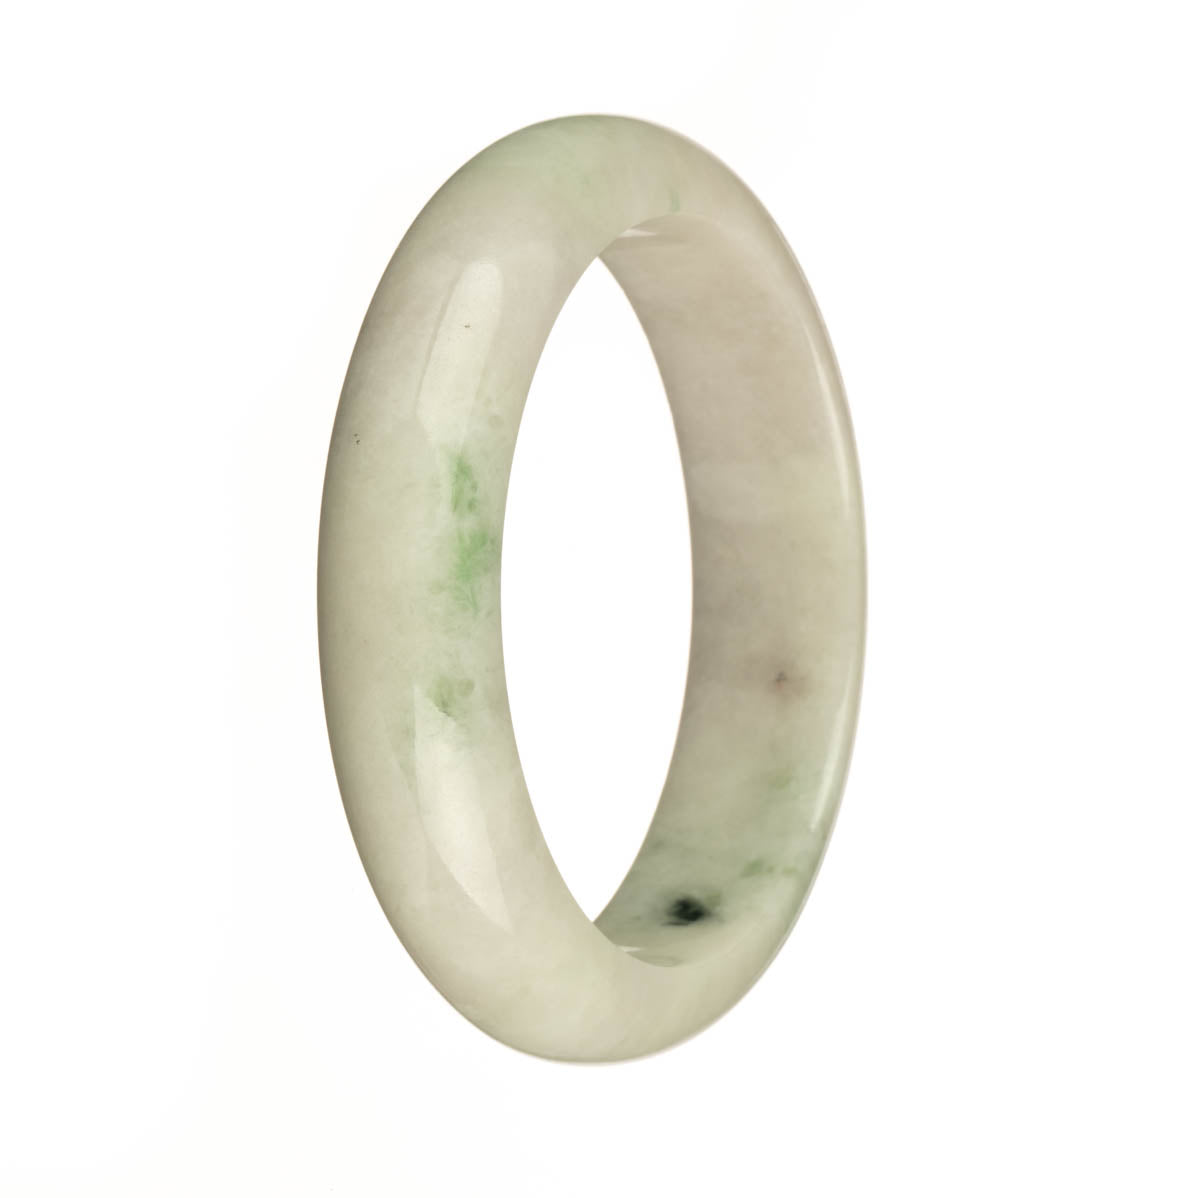 Certified Grade A White, Apple Green and Dark Green Spots Traditional Jade Bangle Bracelet - 59mm Half Moon